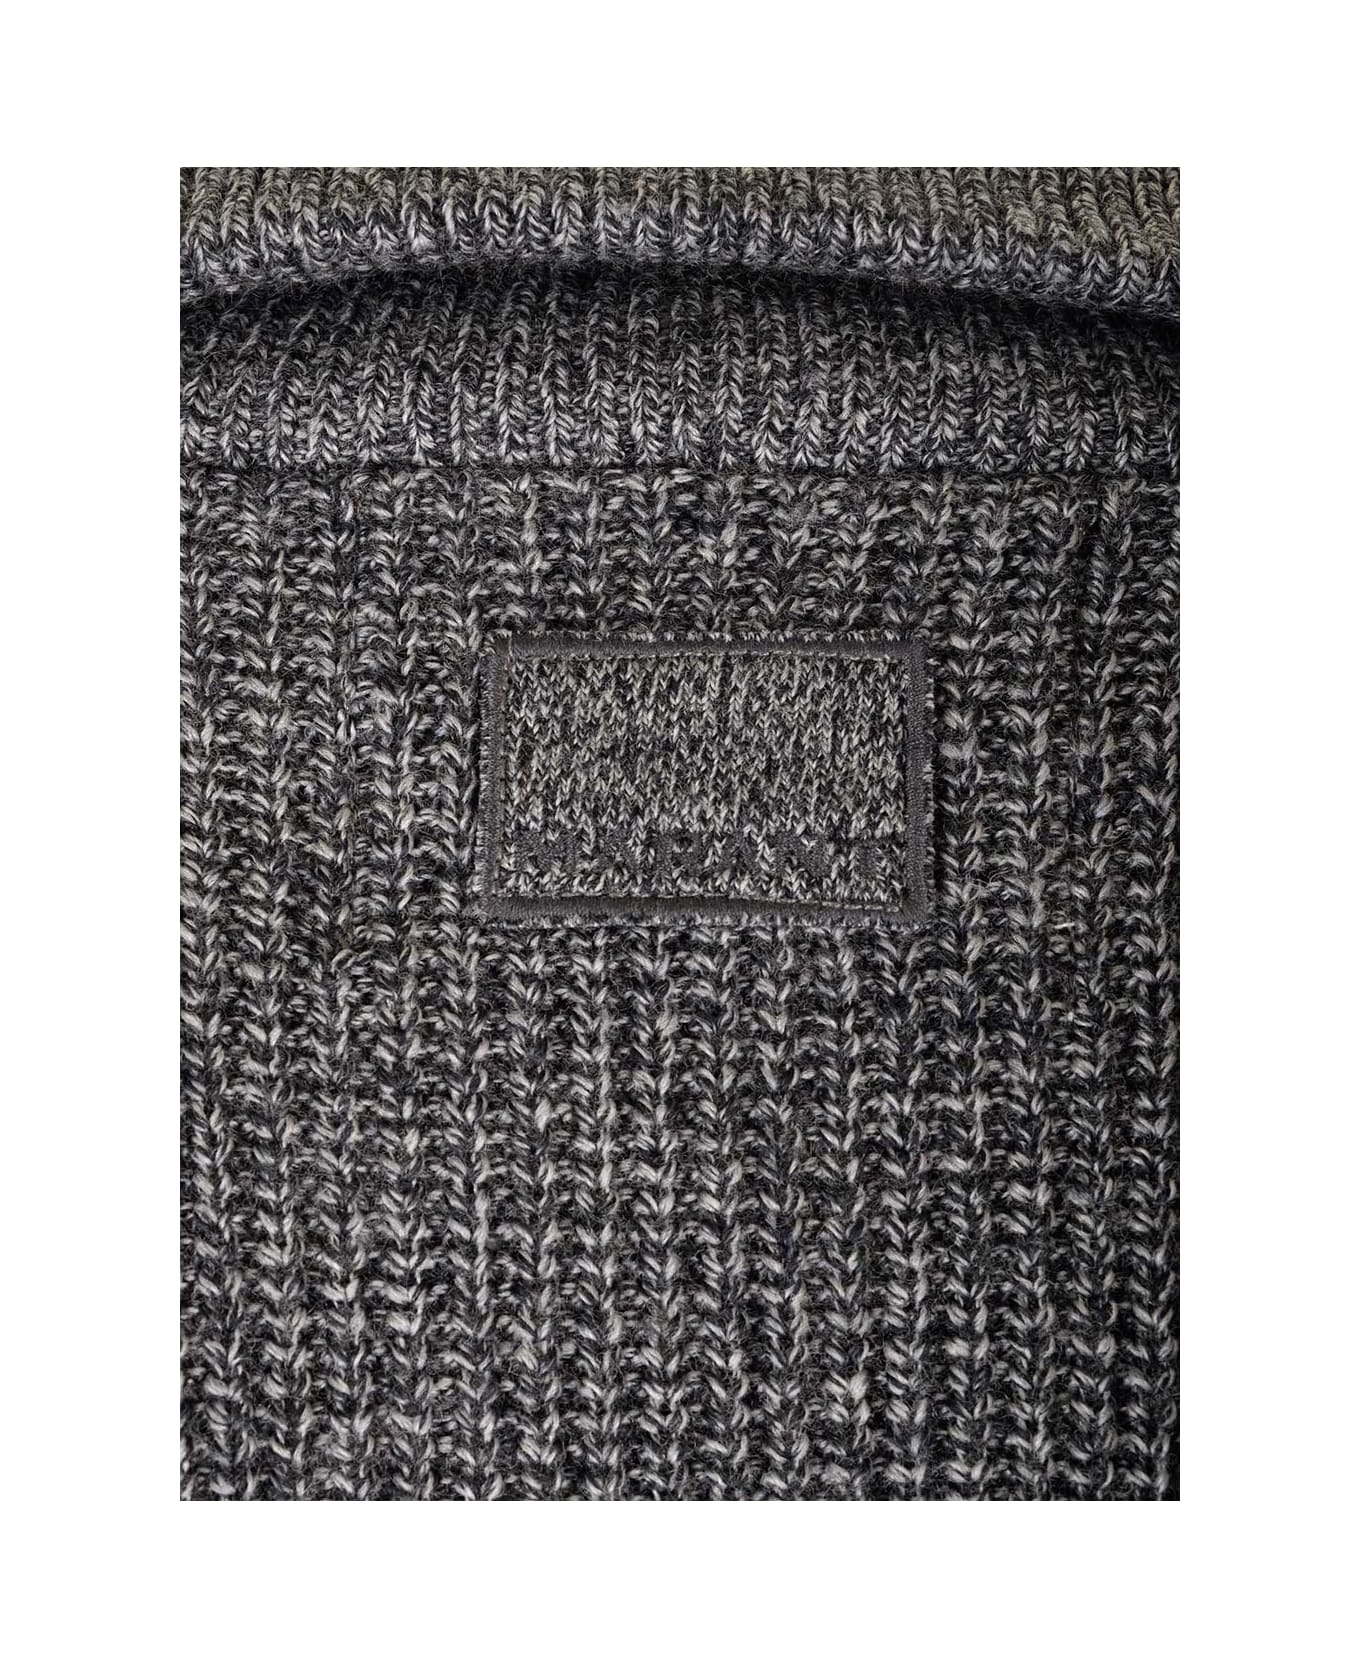 Isabel Marant Benny Sweater - Grey